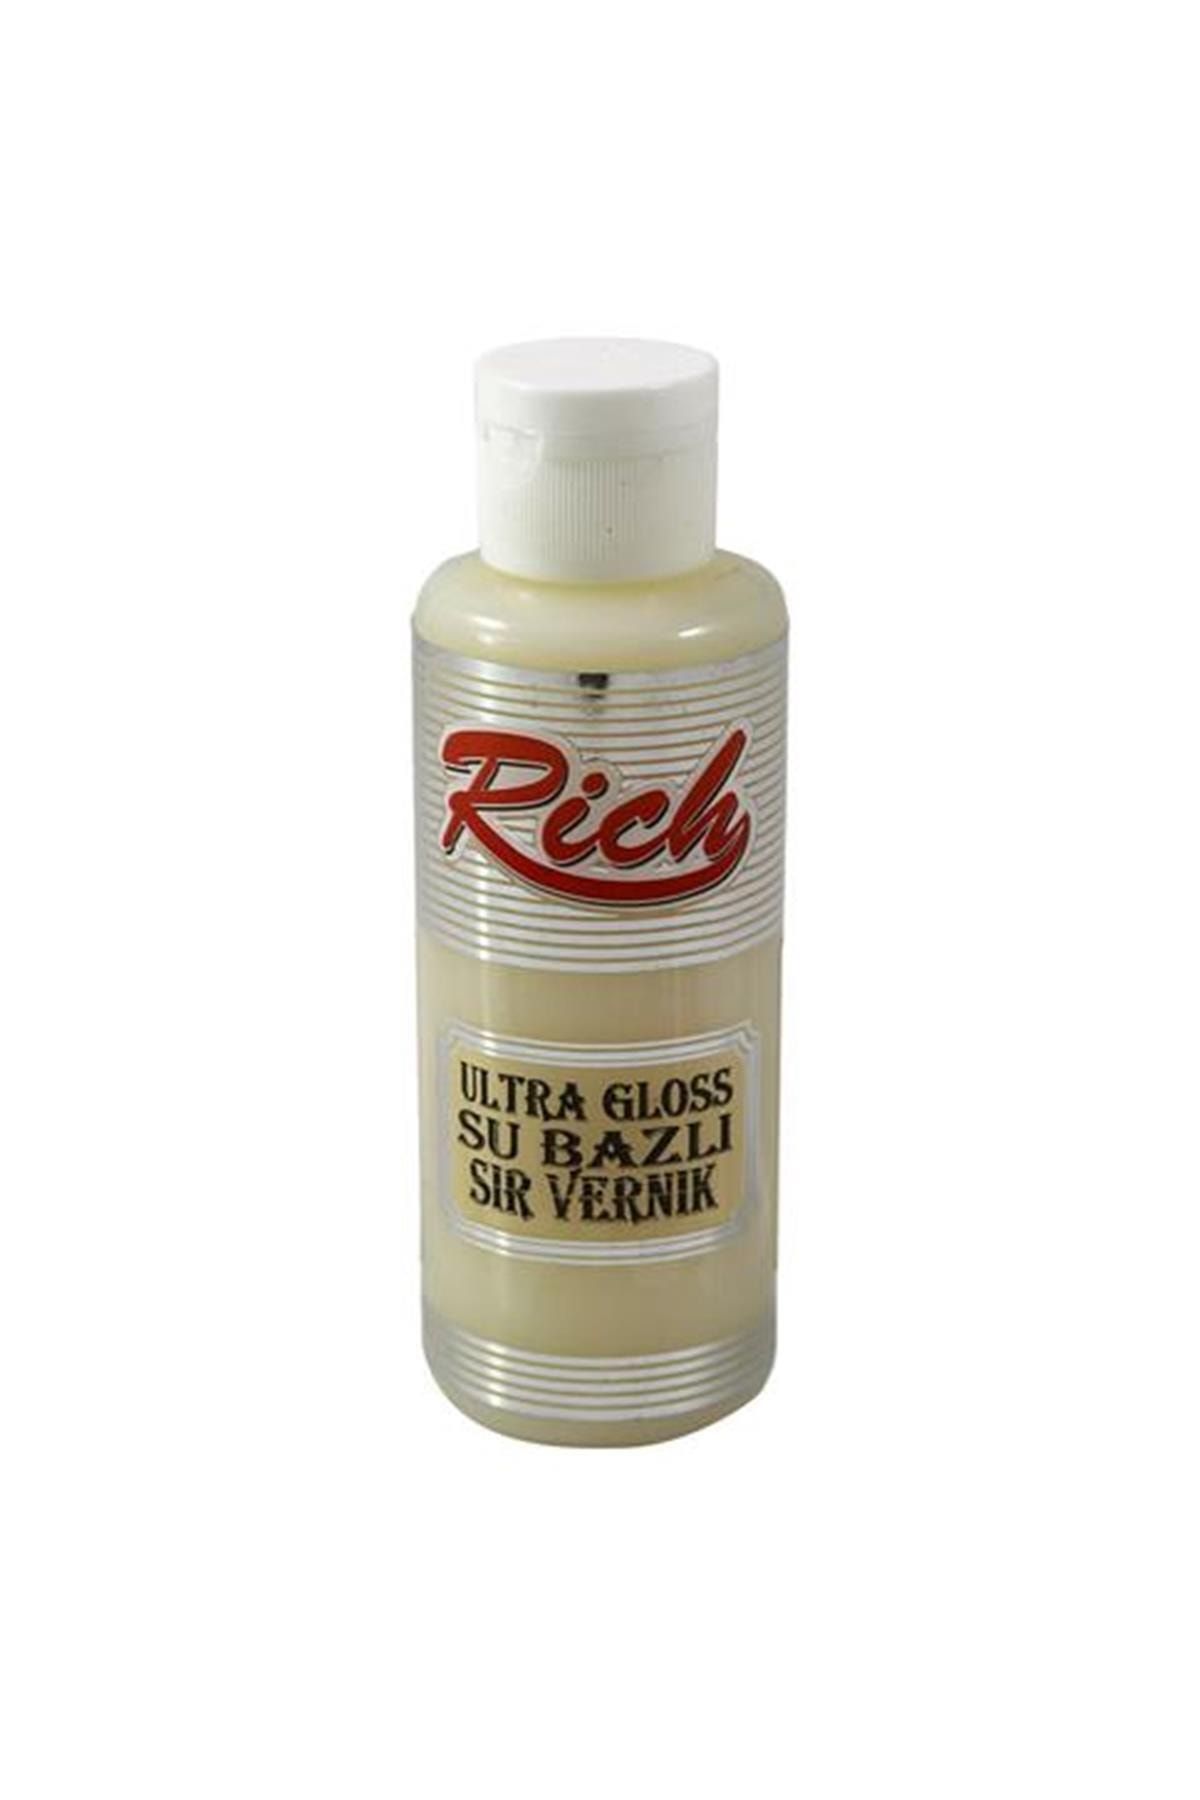 Rich Ultra Gloss Su Bazlı Sır Vernik 130 Cc Kategori: Ebru Seti